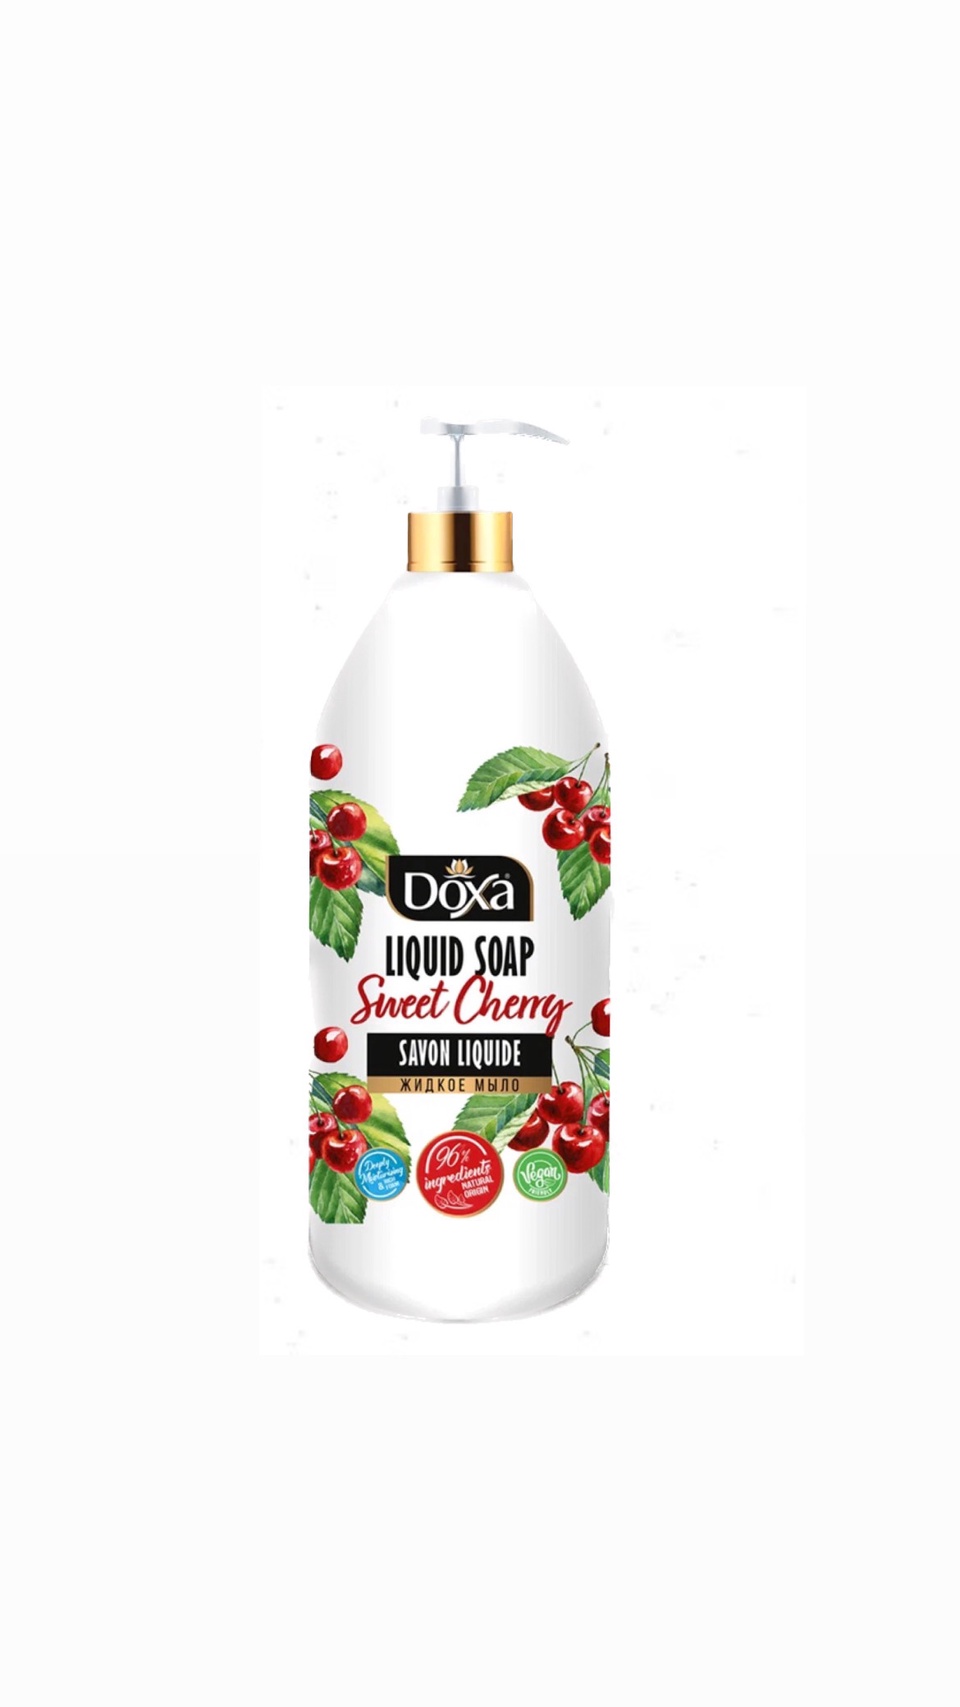 Doxa Liquid Soap  жидкое мыло “Sweet Cherry” - 200 ₽, заказать онлайн.